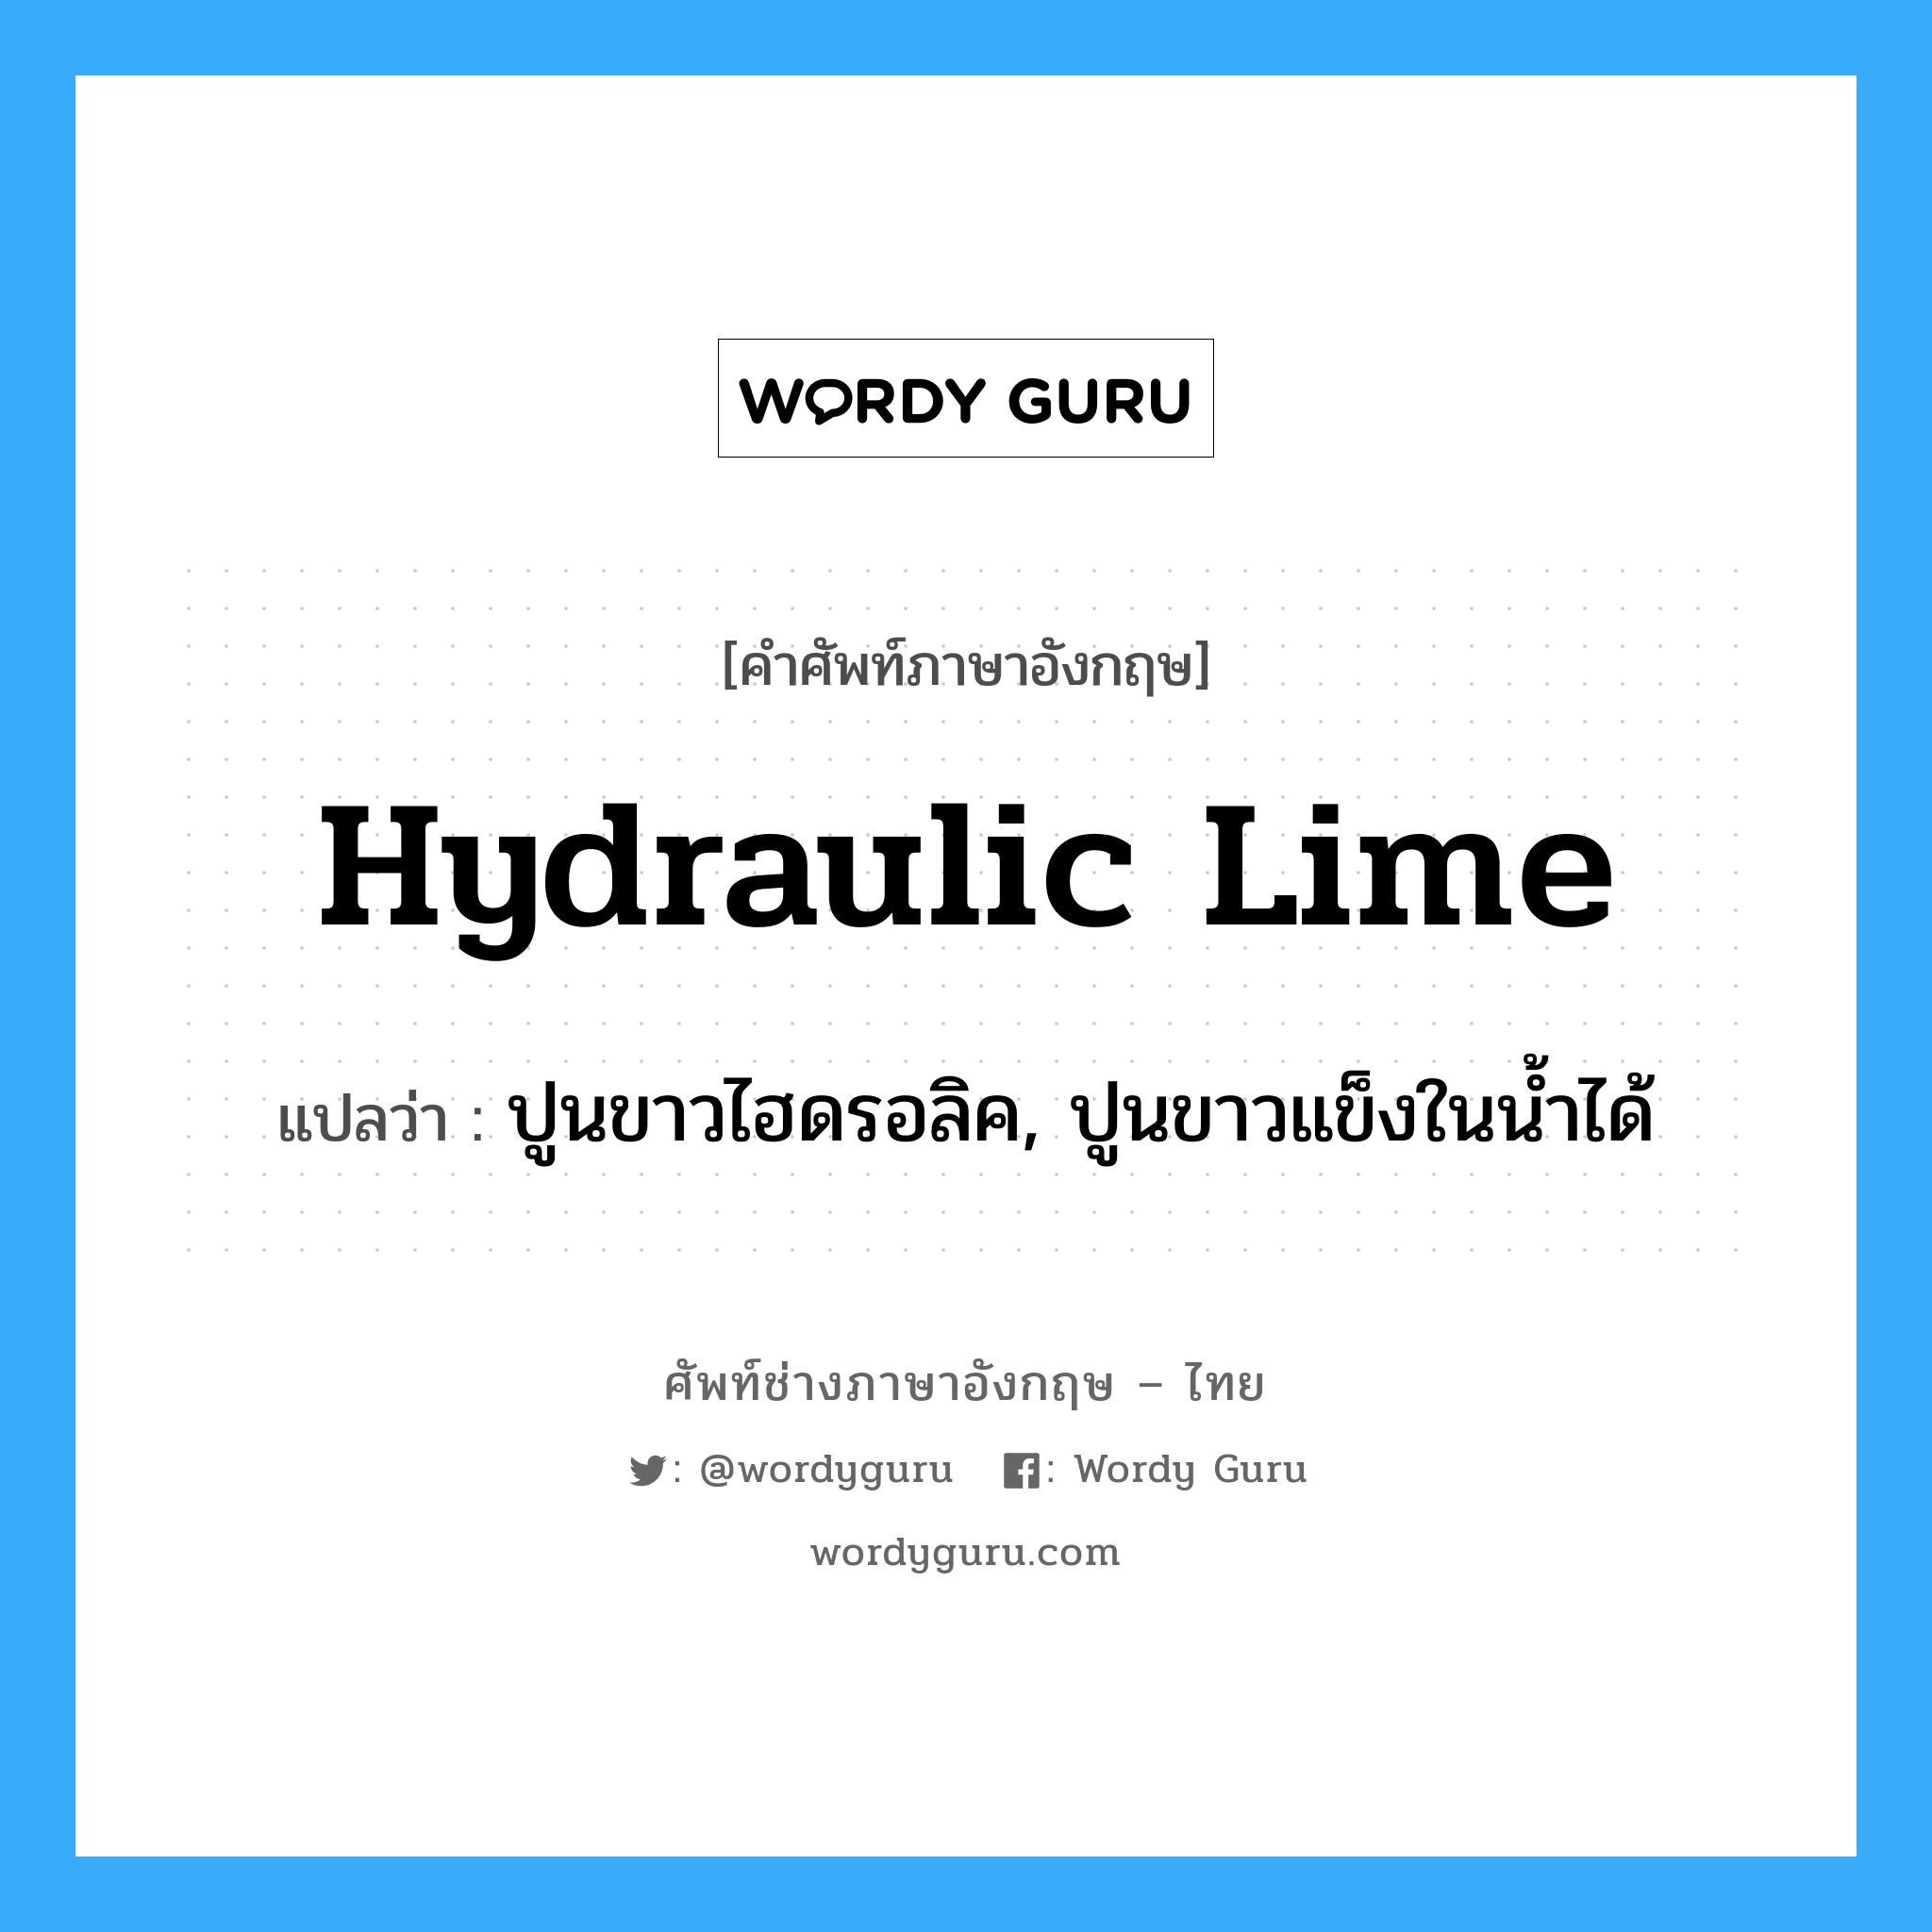 hydraulic lime แปลว่า?, คำศัพท์ช่างภาษาอังกฤษ - ไทย hydraulic lime คำศัพท์ภาษาอังกฤษ hydraulic lime แปลว่า ปูนขาวไฮดรอลิค, ปูนขาวแข็งในน้ำได้